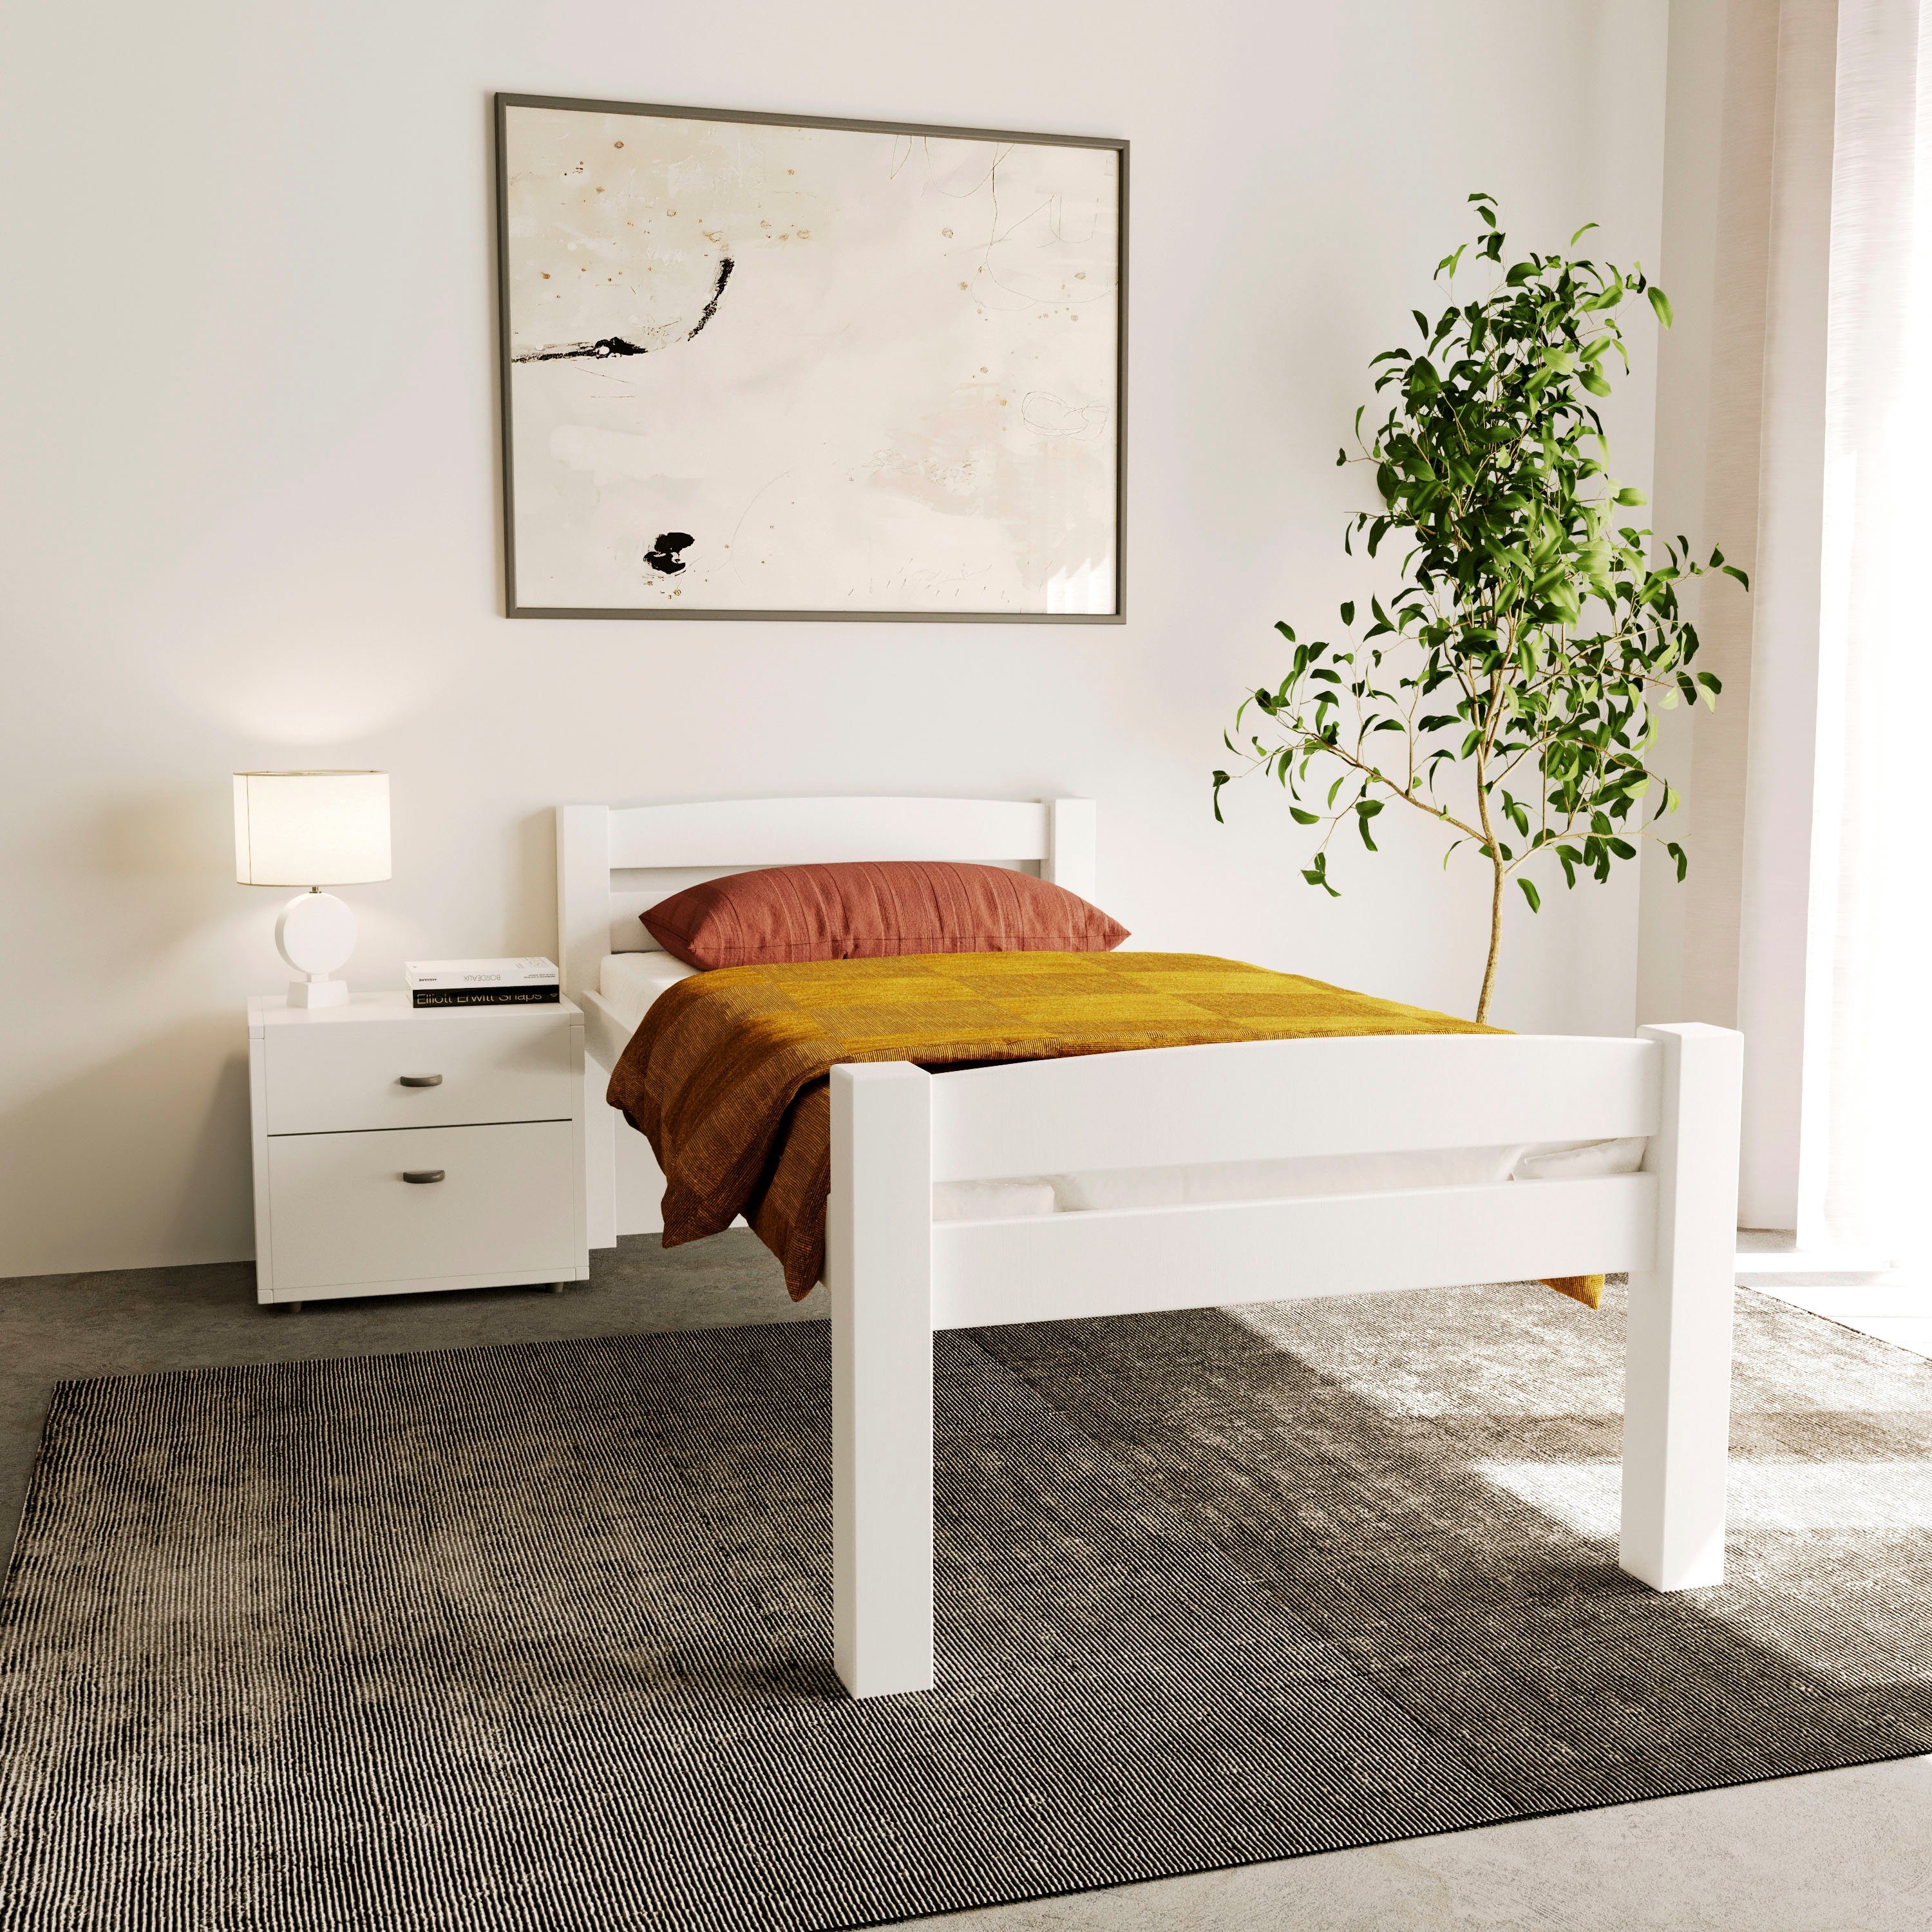 Home affaire Einzelbett "OFI", Jugendbett, Skandinavisches Design, zeitlos elegant, zertifiziertes Massivholz, Liegefläche 90x200 cm